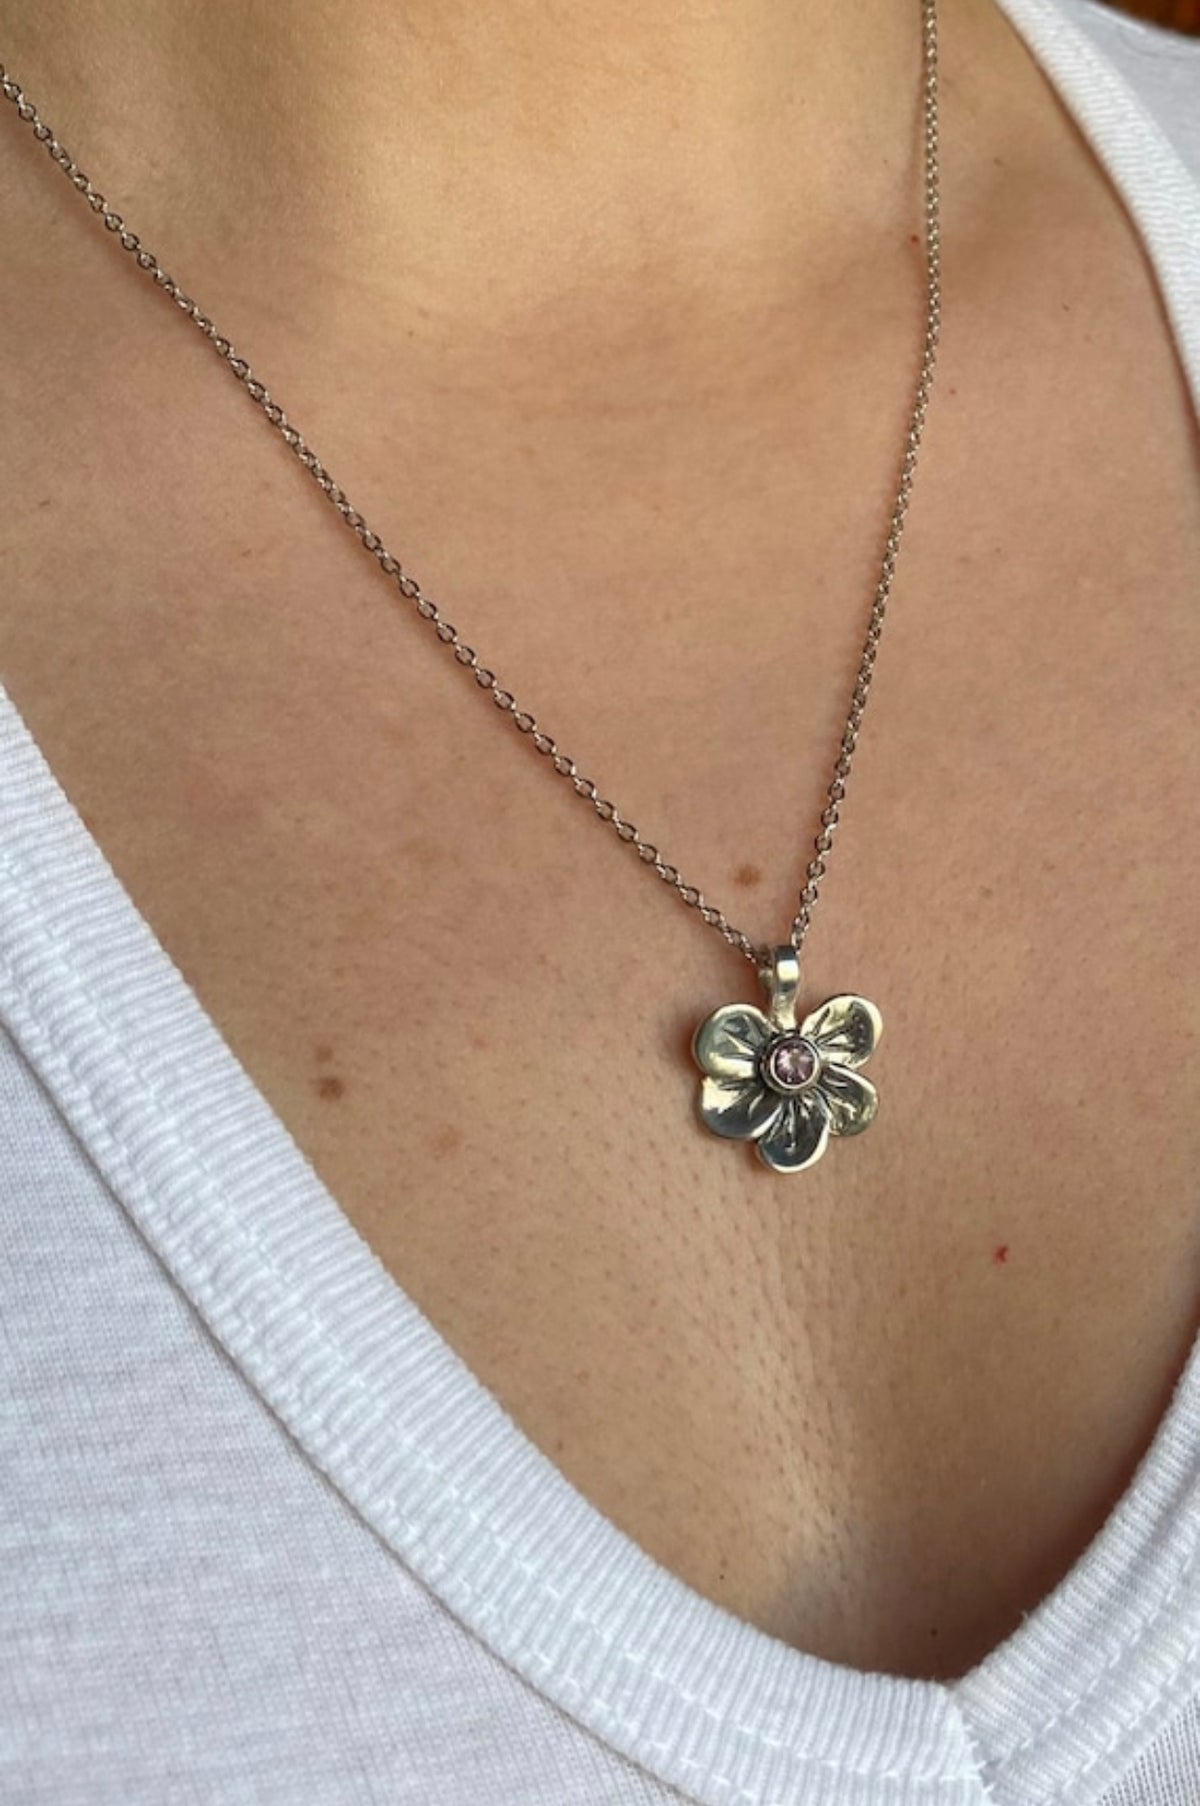 flower necklace with amethyst gemstone